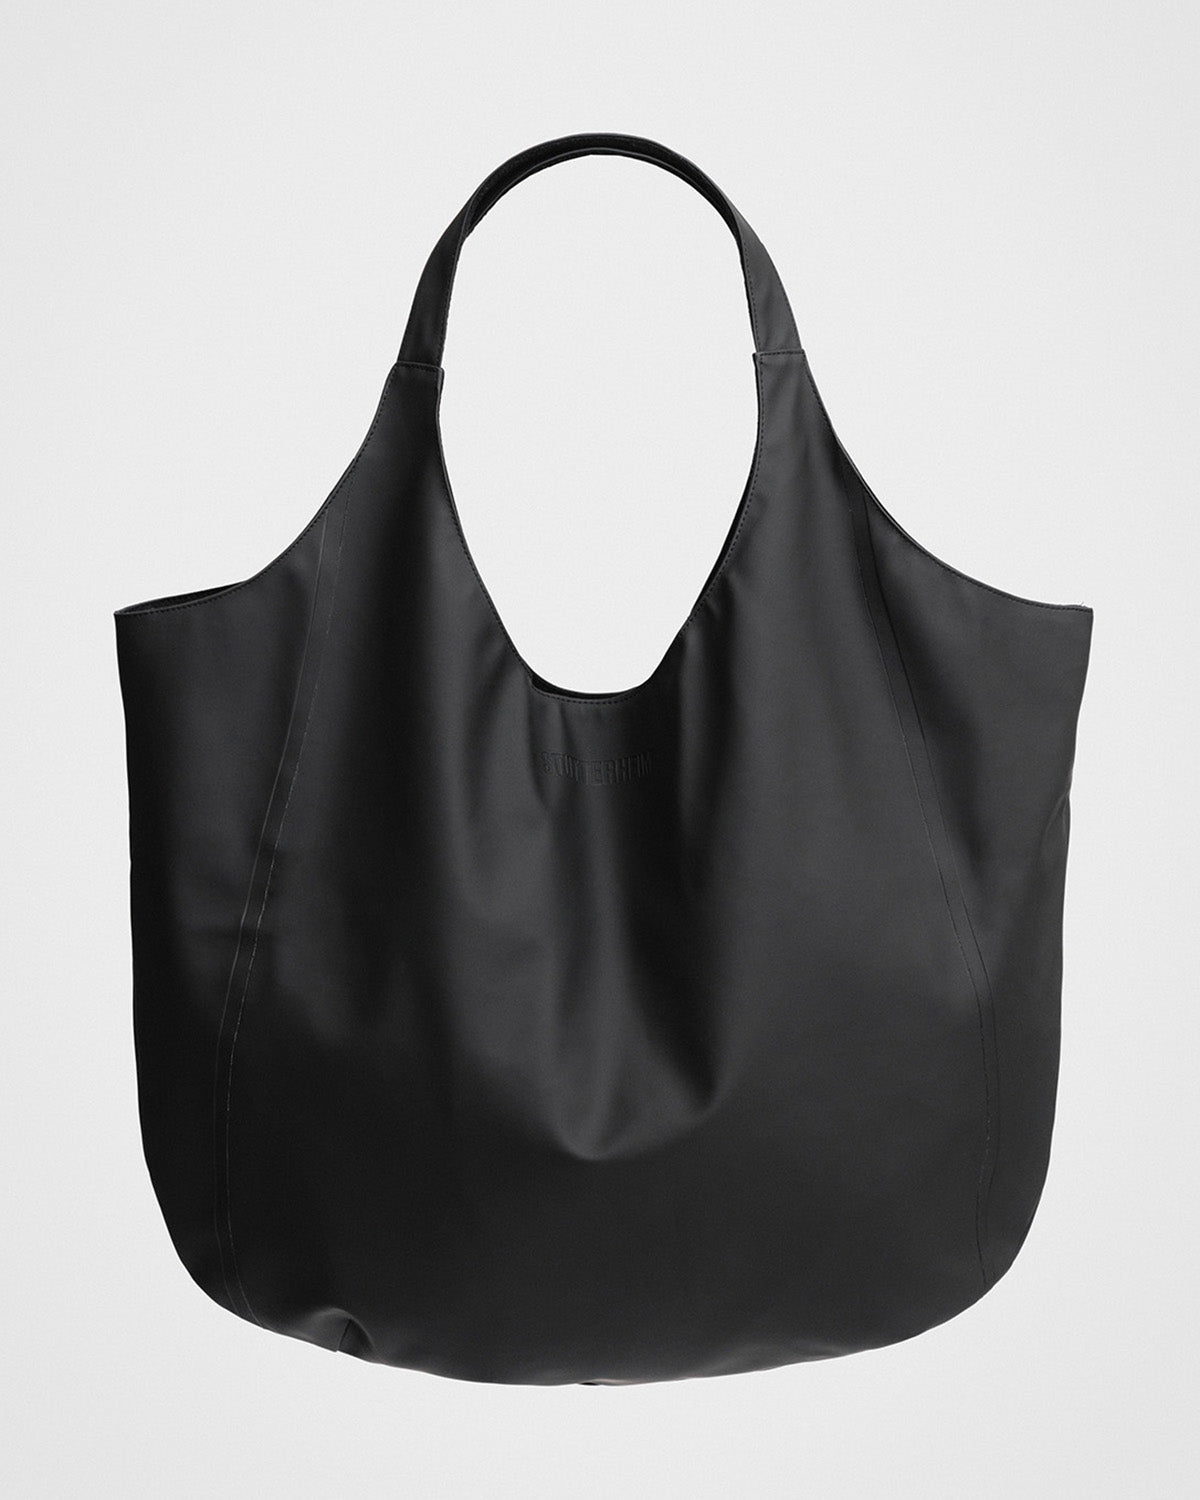 Tote Bag in color black by Stutterheim